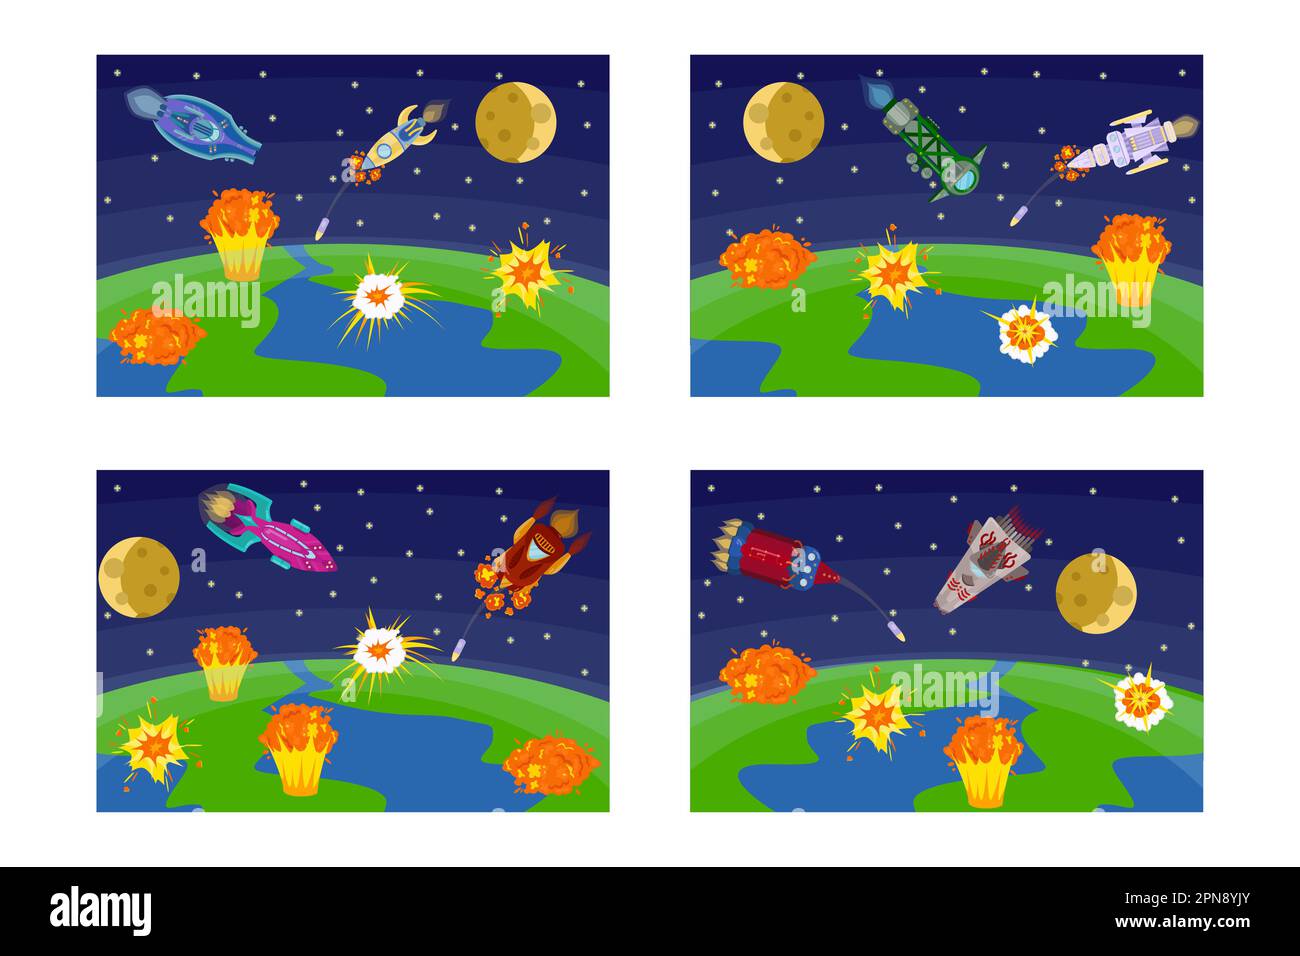 Alien spaceships attacking Earth cartoon illustrations set Stock Vector